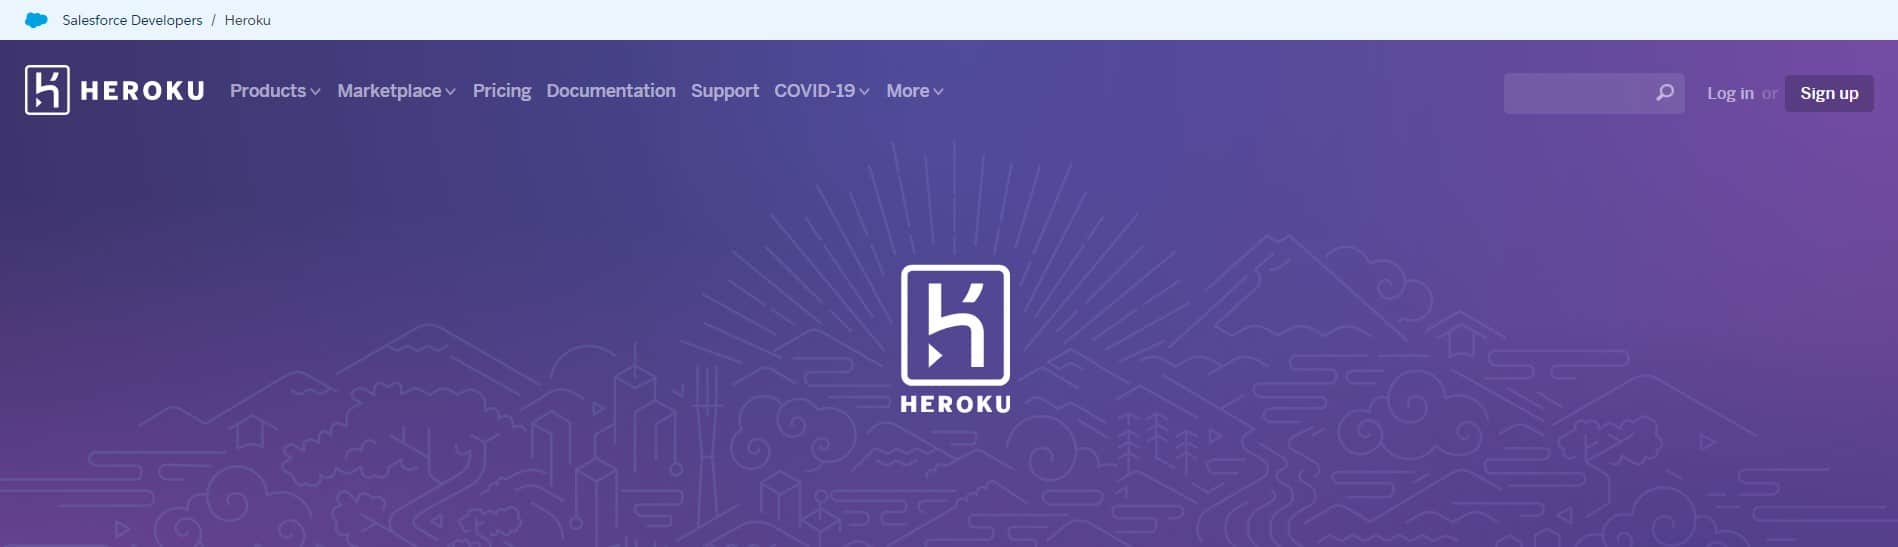 Heroku Homepage Screenshot